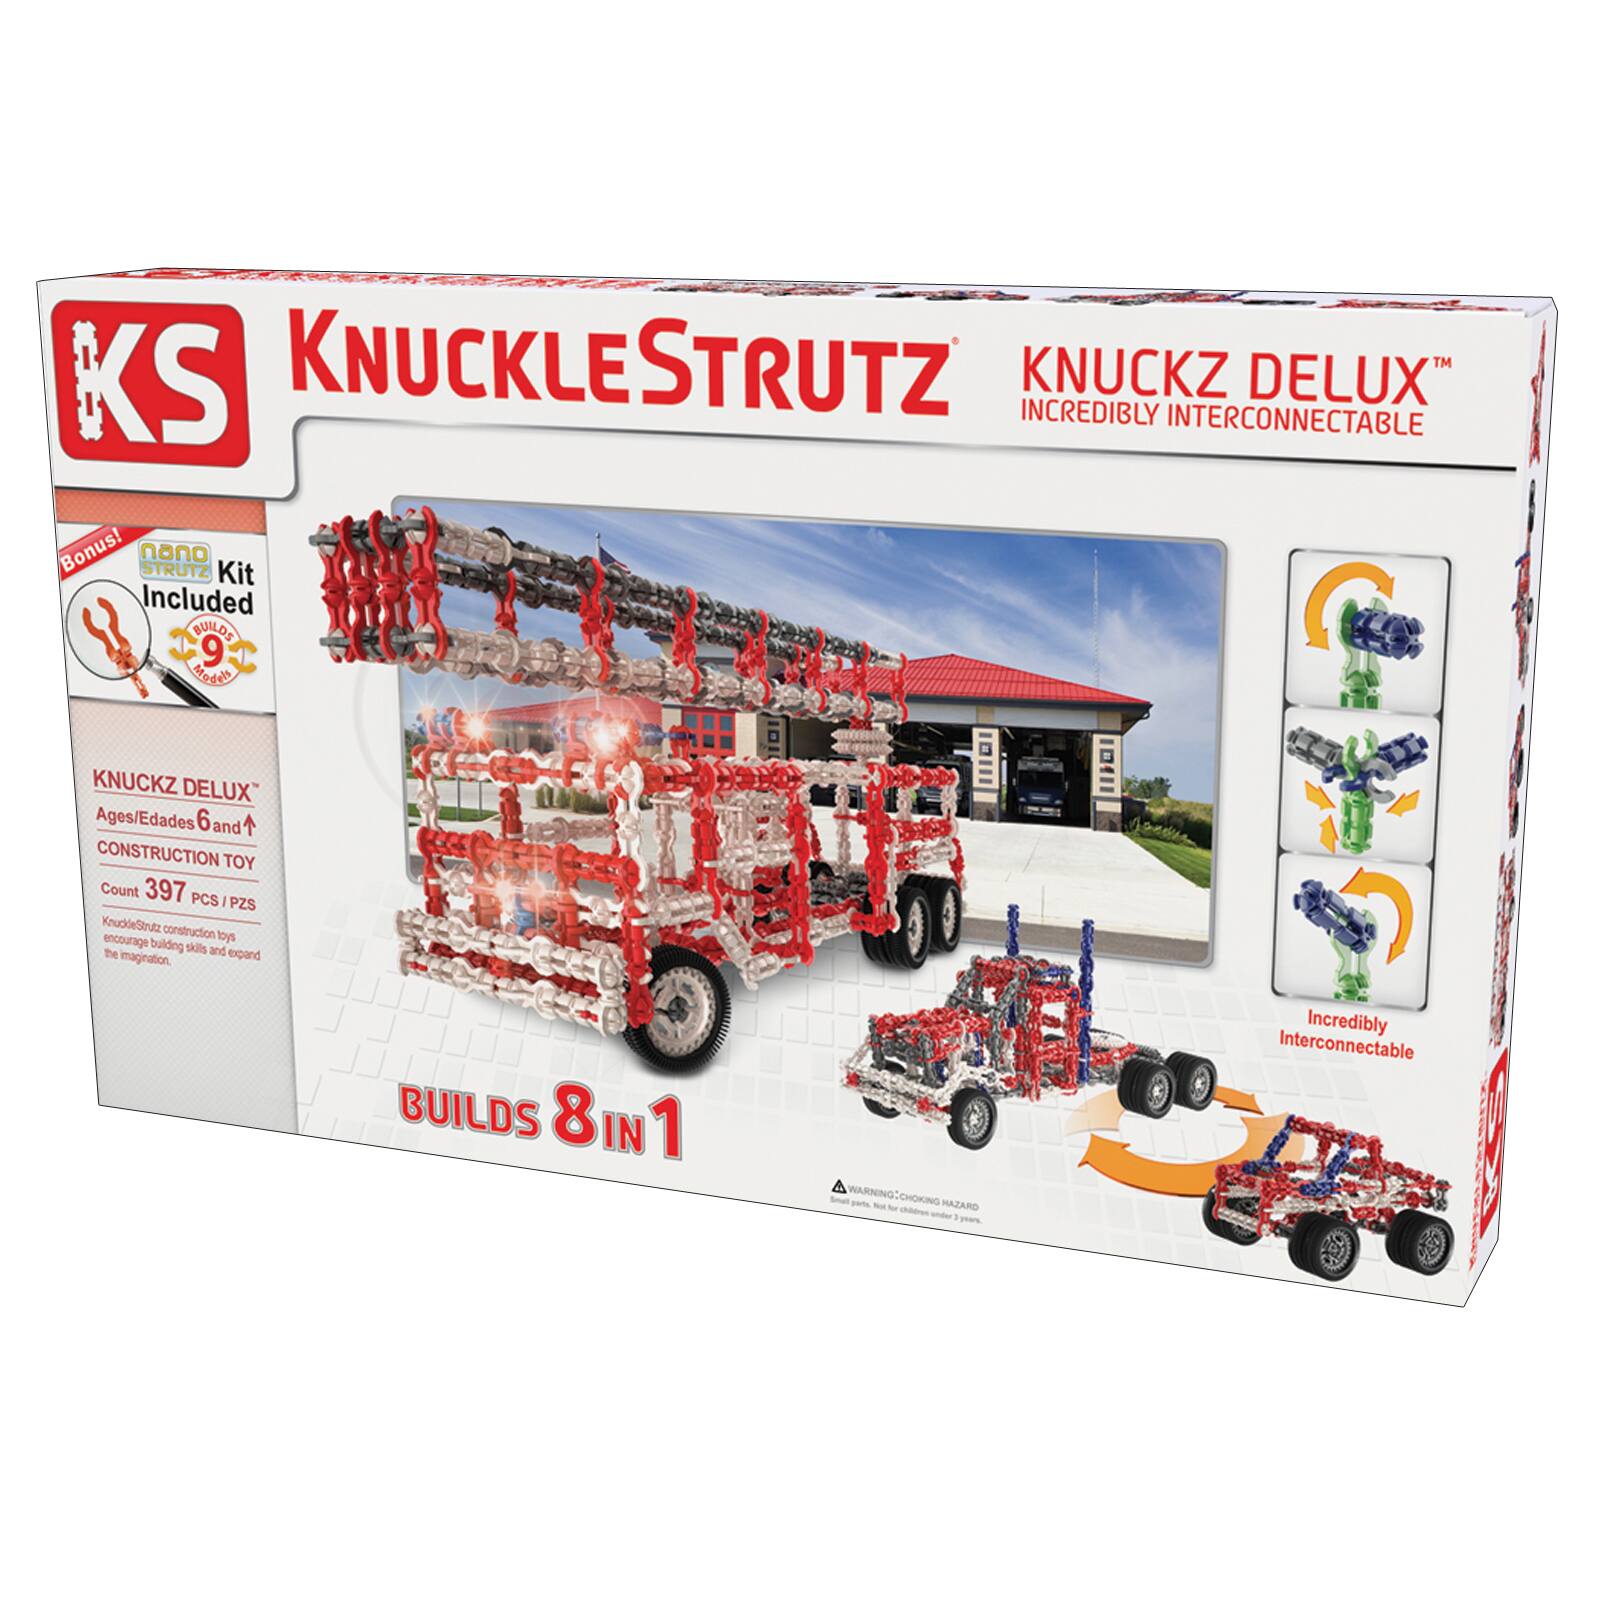 KnuckleStrutz Knuckz Delux Building Construction Toy Fire Truck Big Rig 